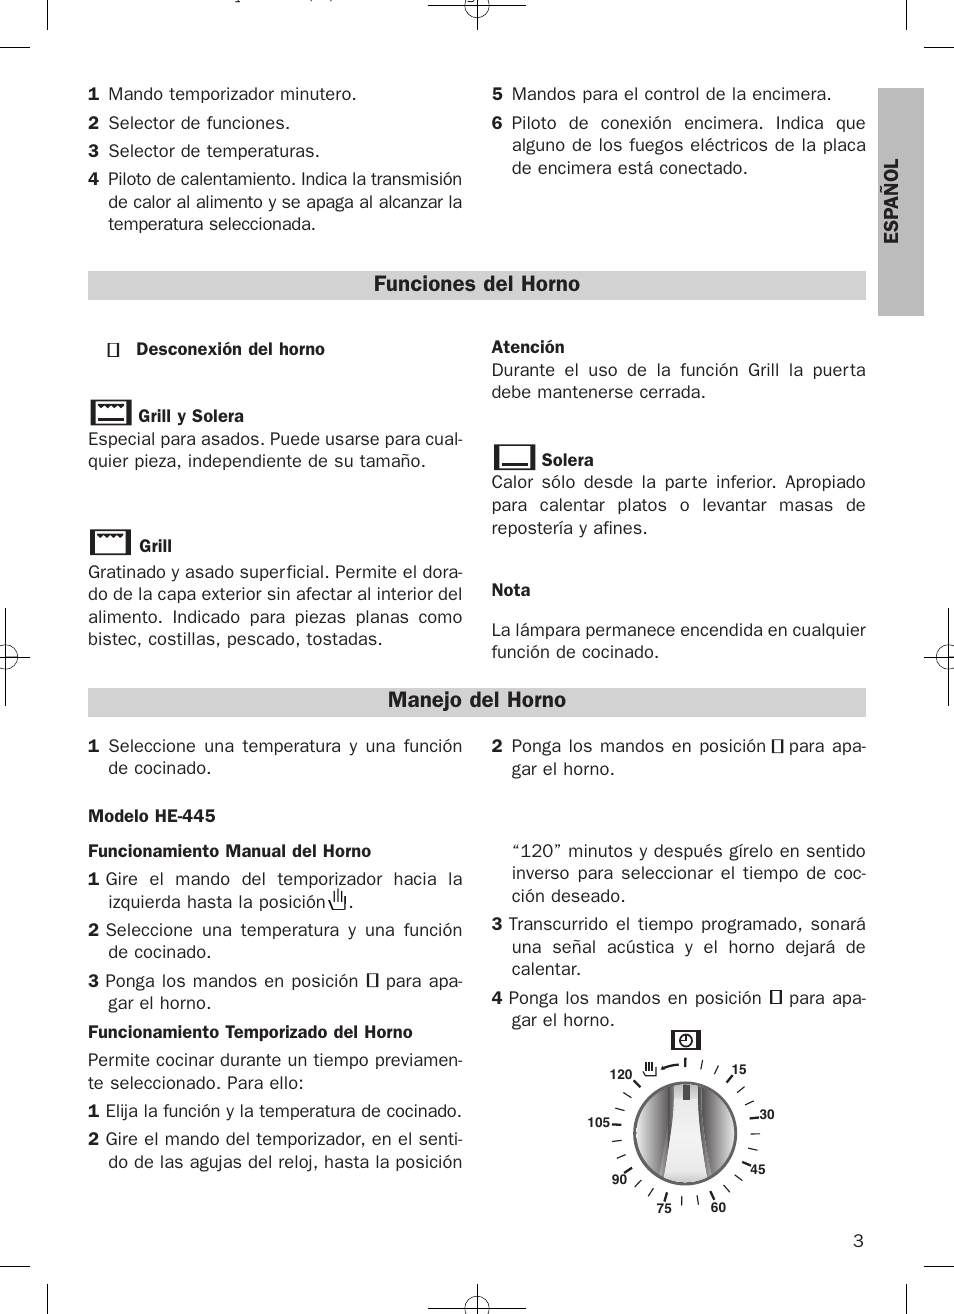 Funciones del horno, Manejo del horno | Teka HE 435 ME User Manual | Page 3  / 12 | Original mode